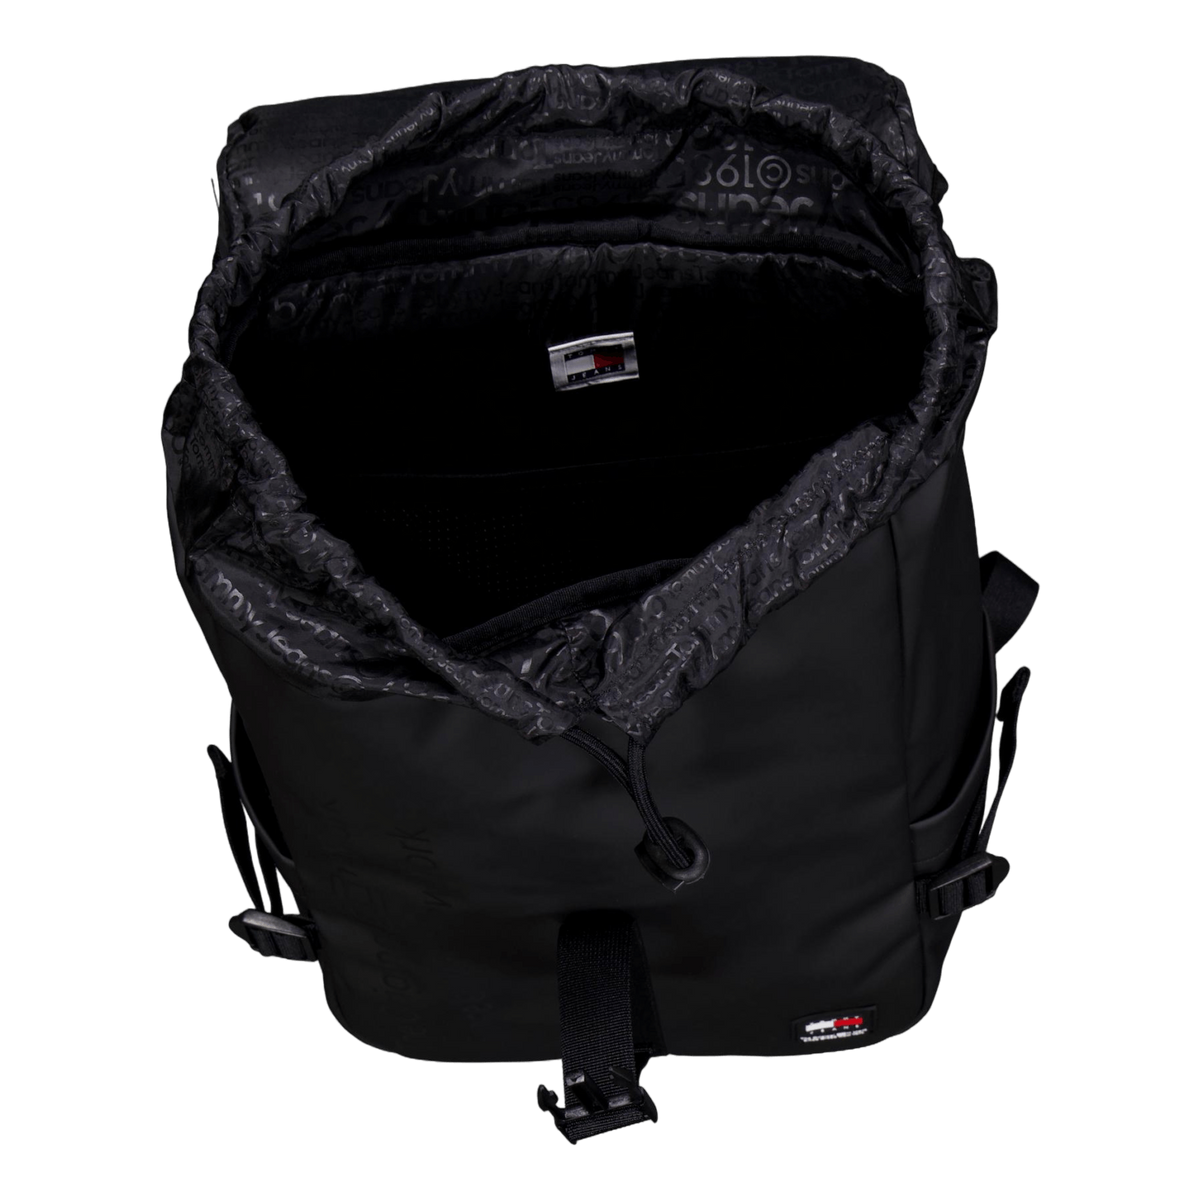 Tjm Daily + Flap Backpack Bds-black